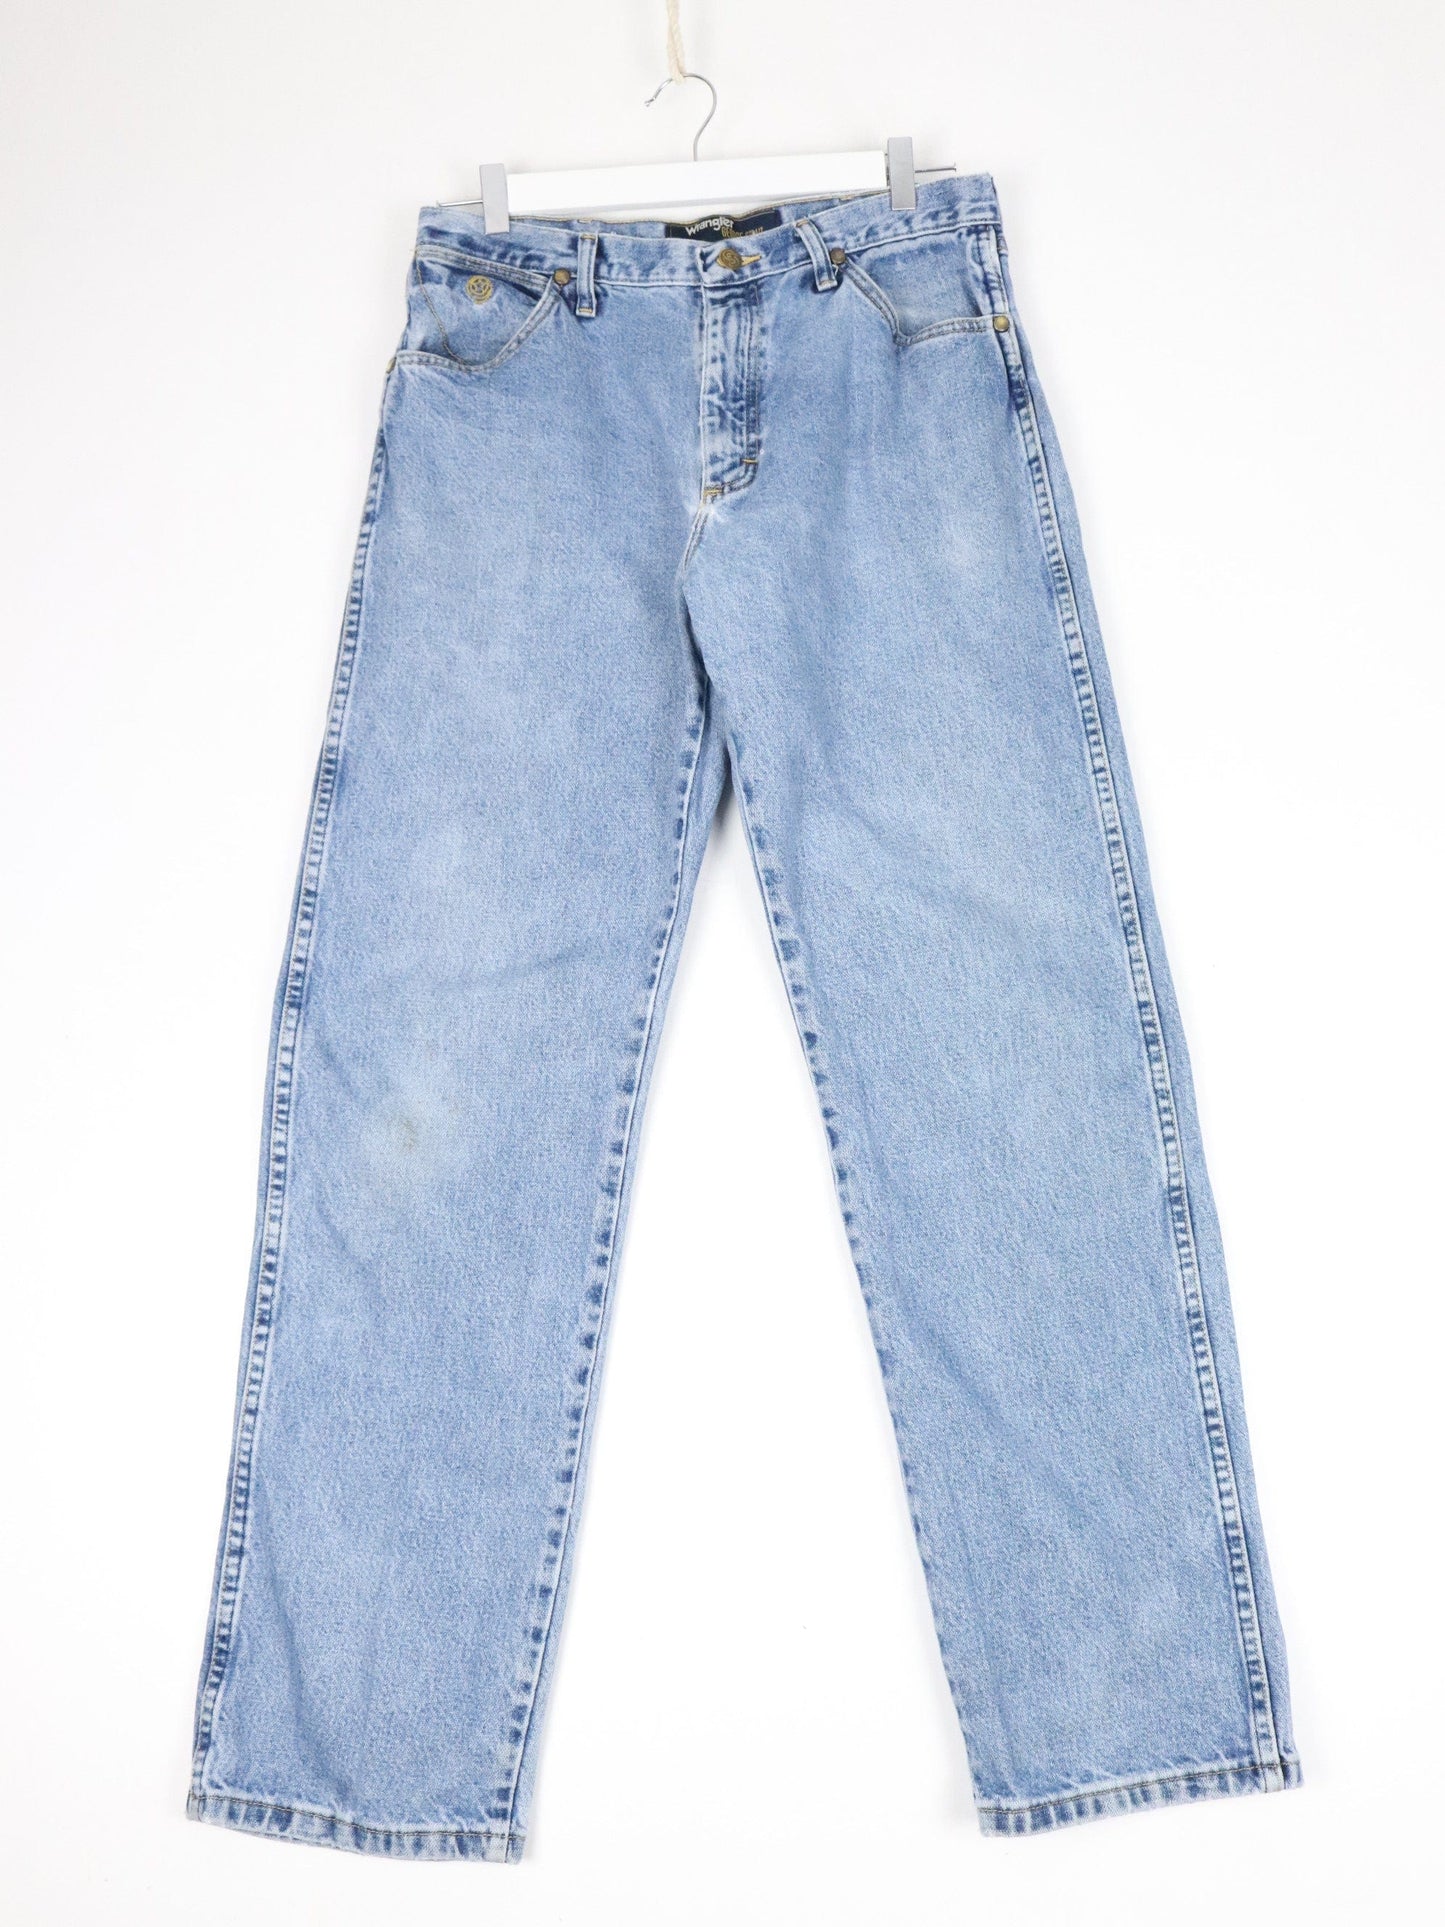 Wrangler Jeans Wrangler Pants Fits Mens 31 x 30 Blue Denim Jens George Strait Collection